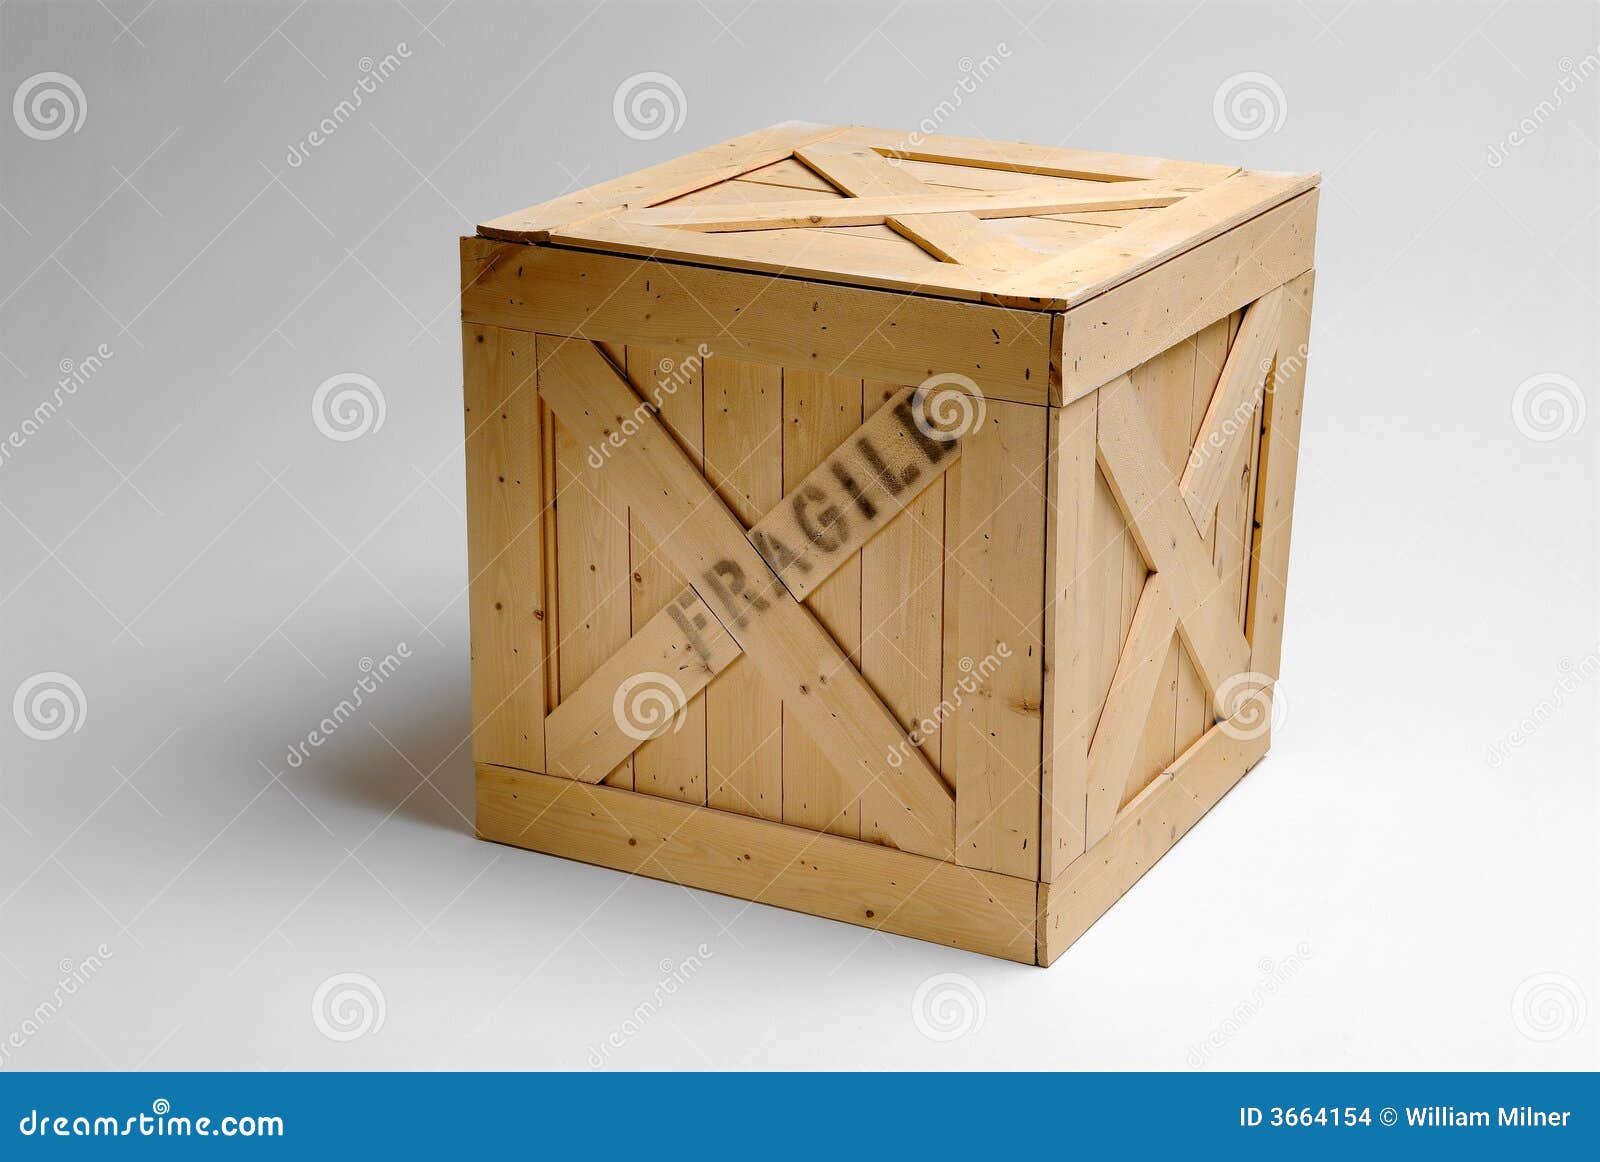 Cargo Box stock photo. Image of shipping, wooden, cargo ...